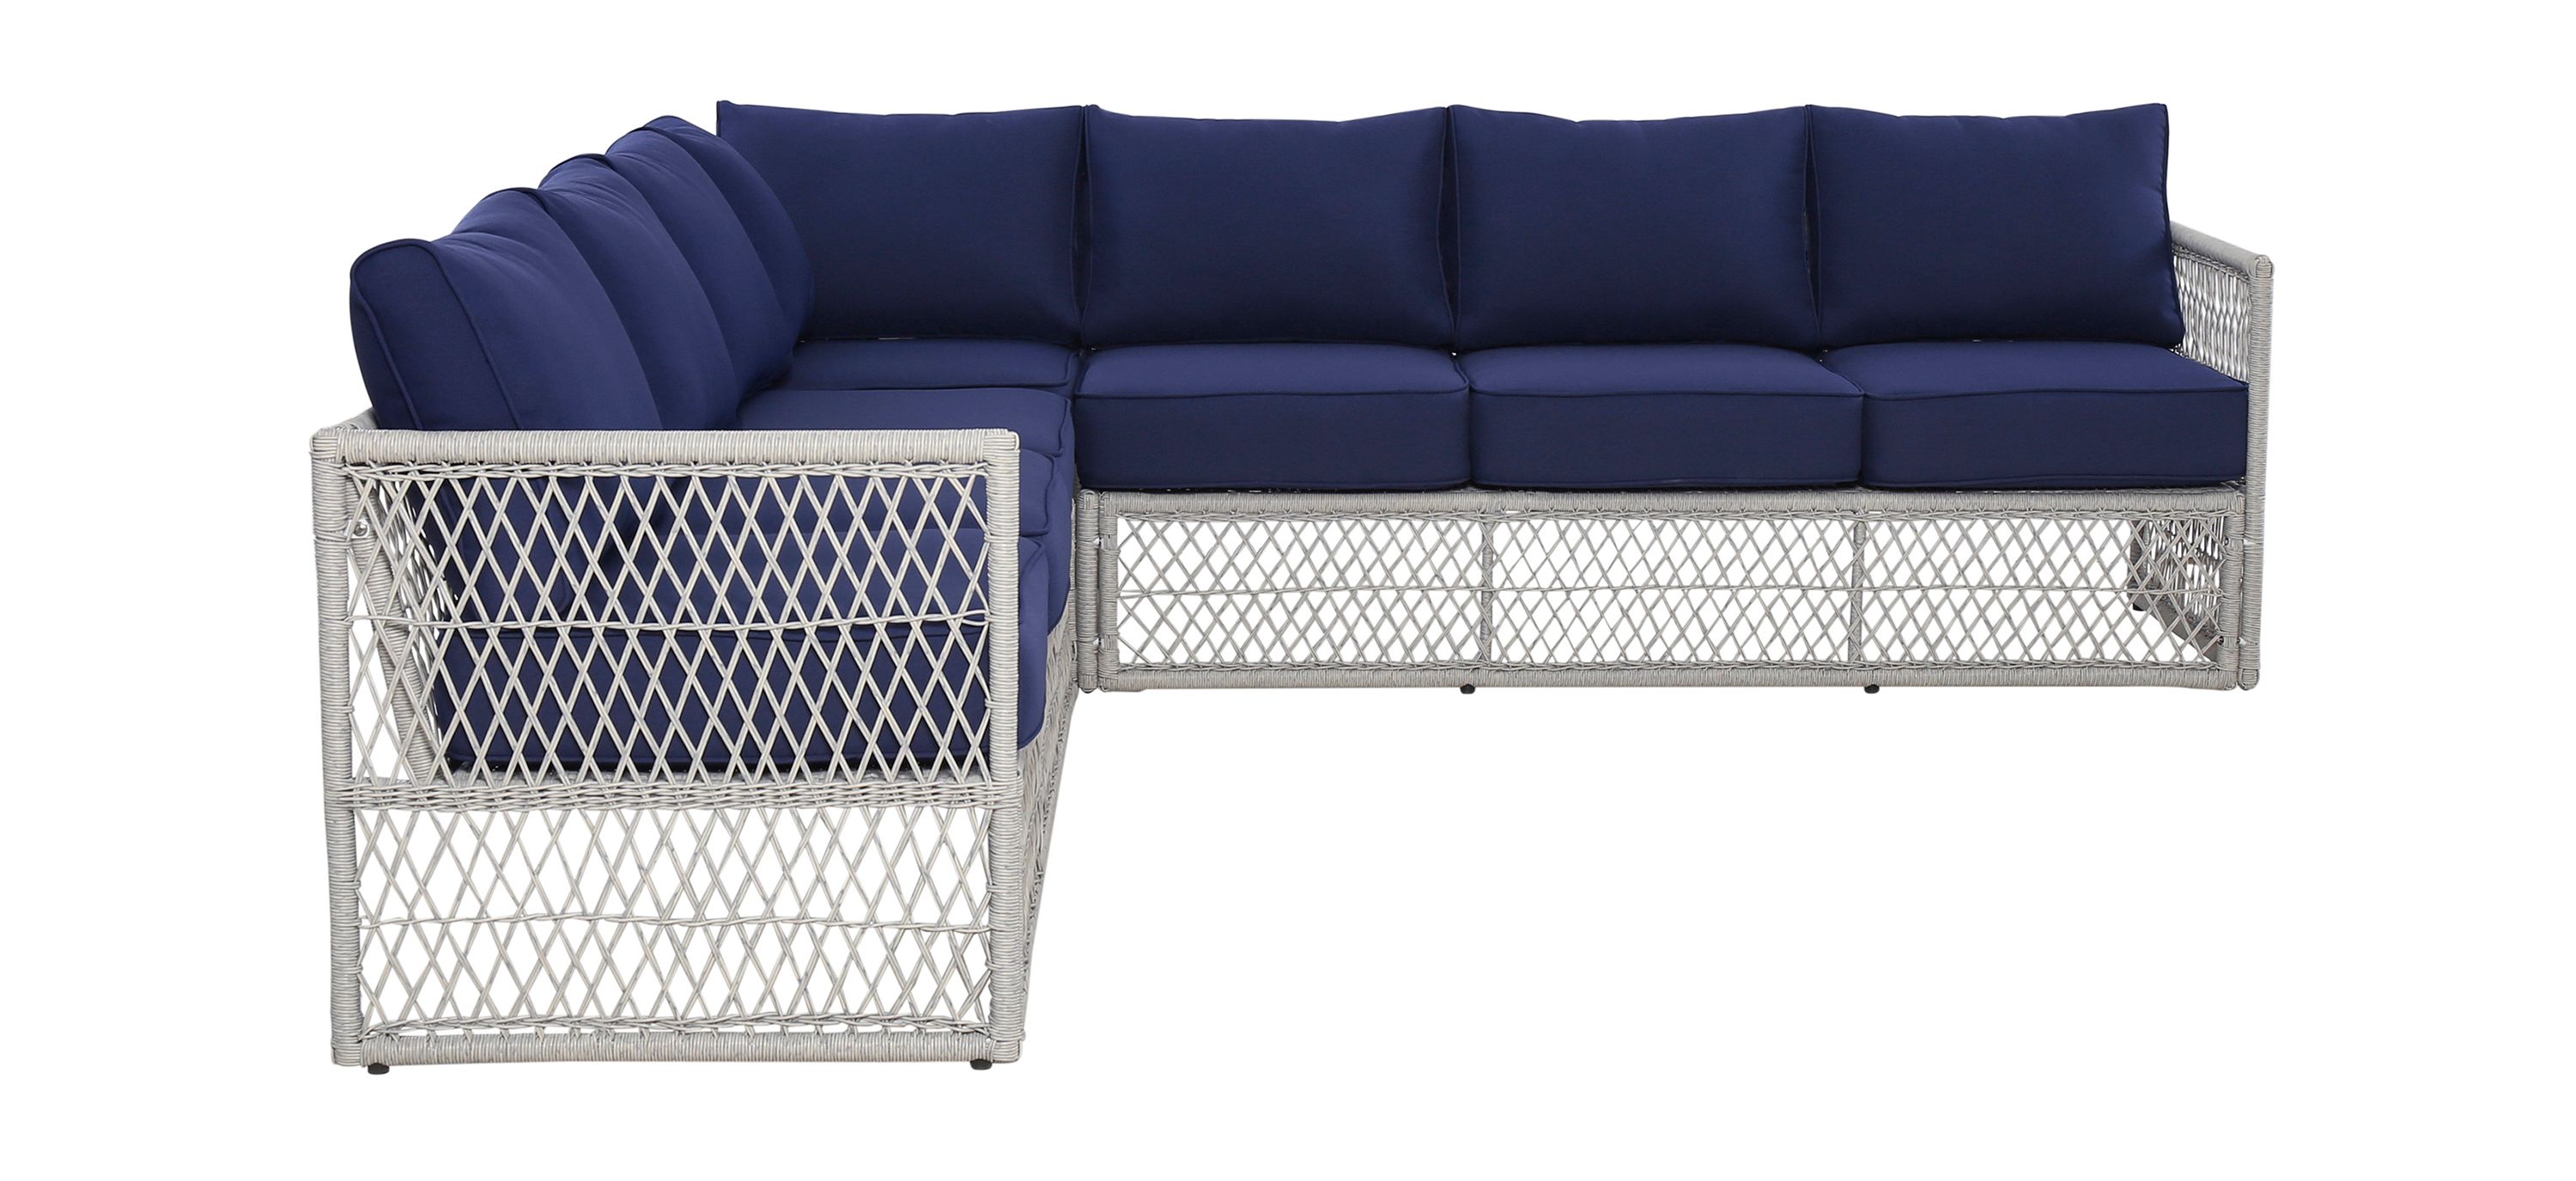 Alaric 2-pc. Outdoor Symmetrical Sectional Sofa